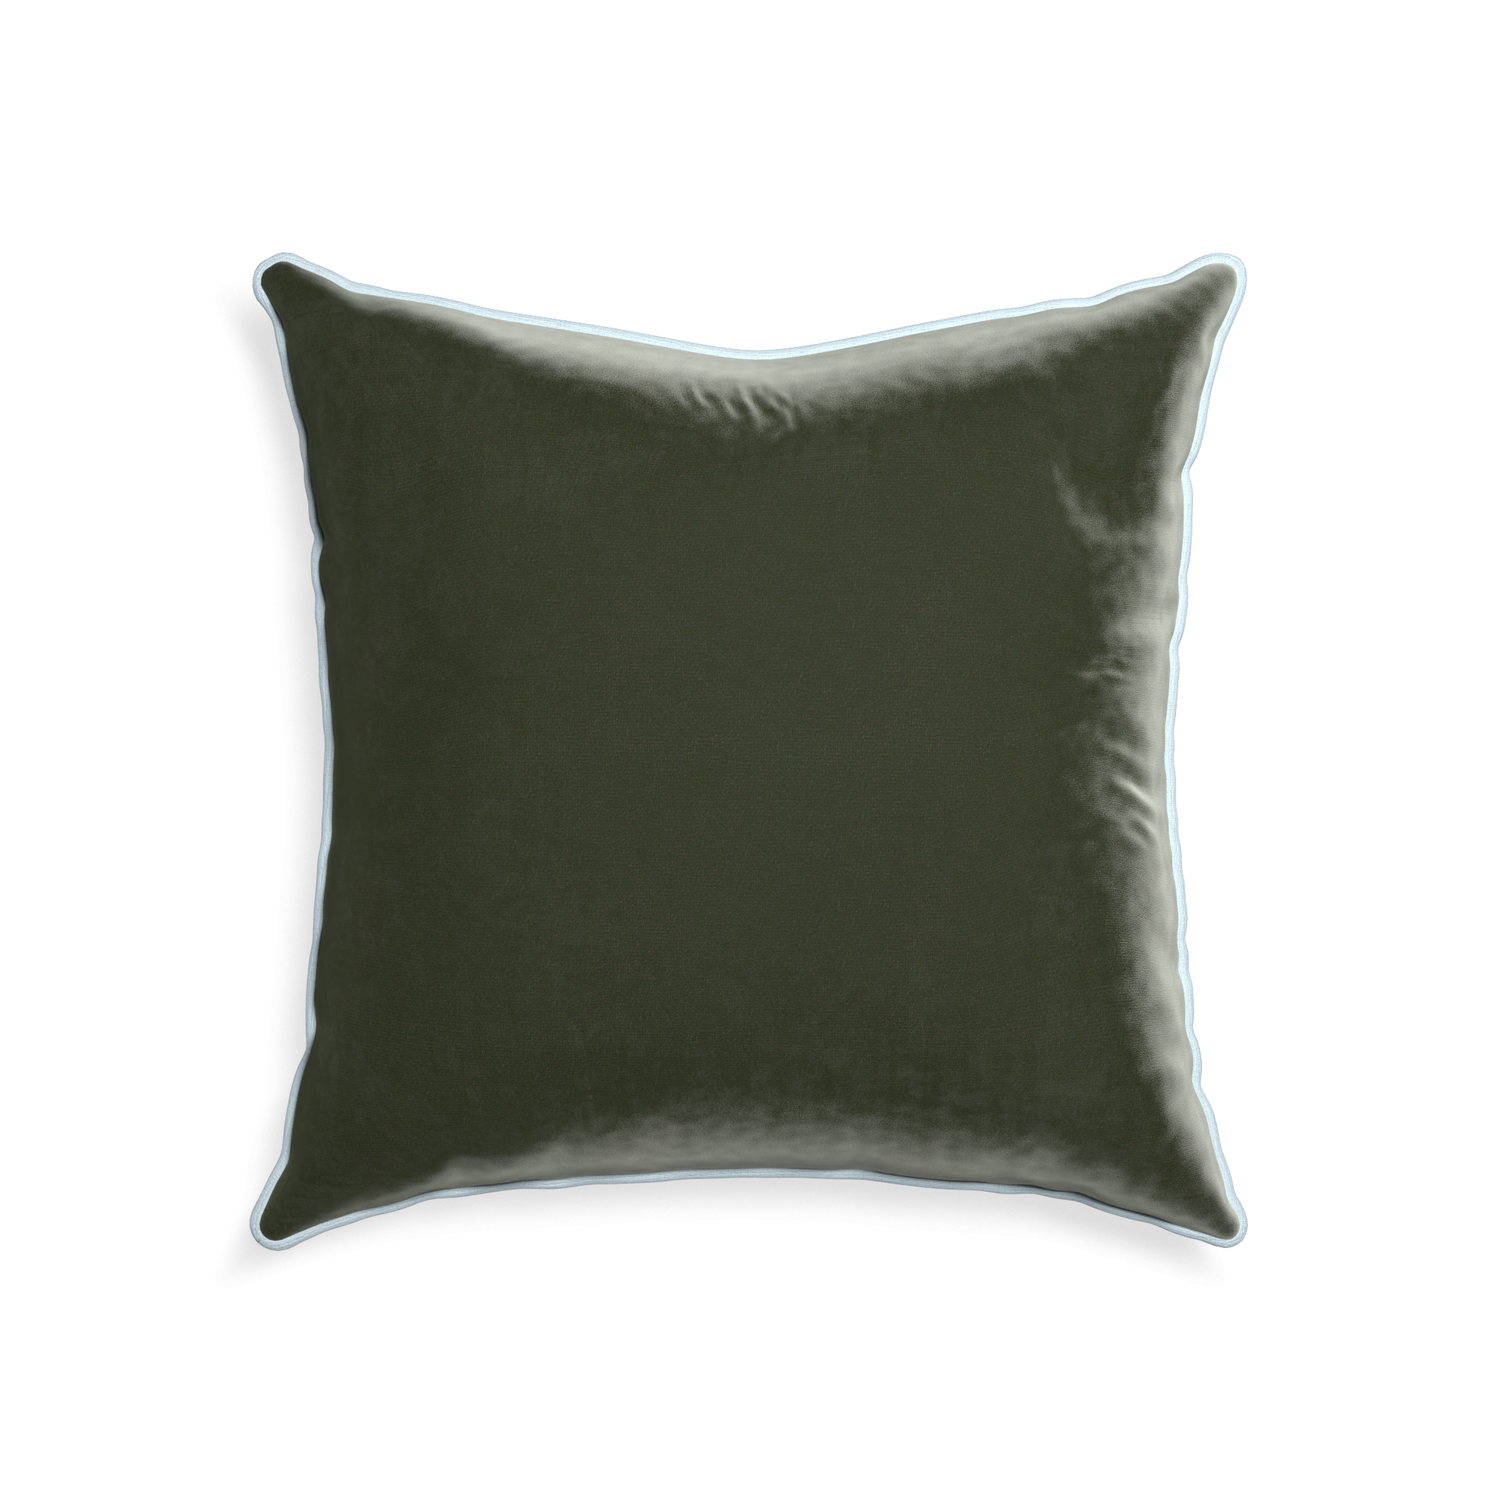 22-square fern velvet custom pillow with powder piping on white background